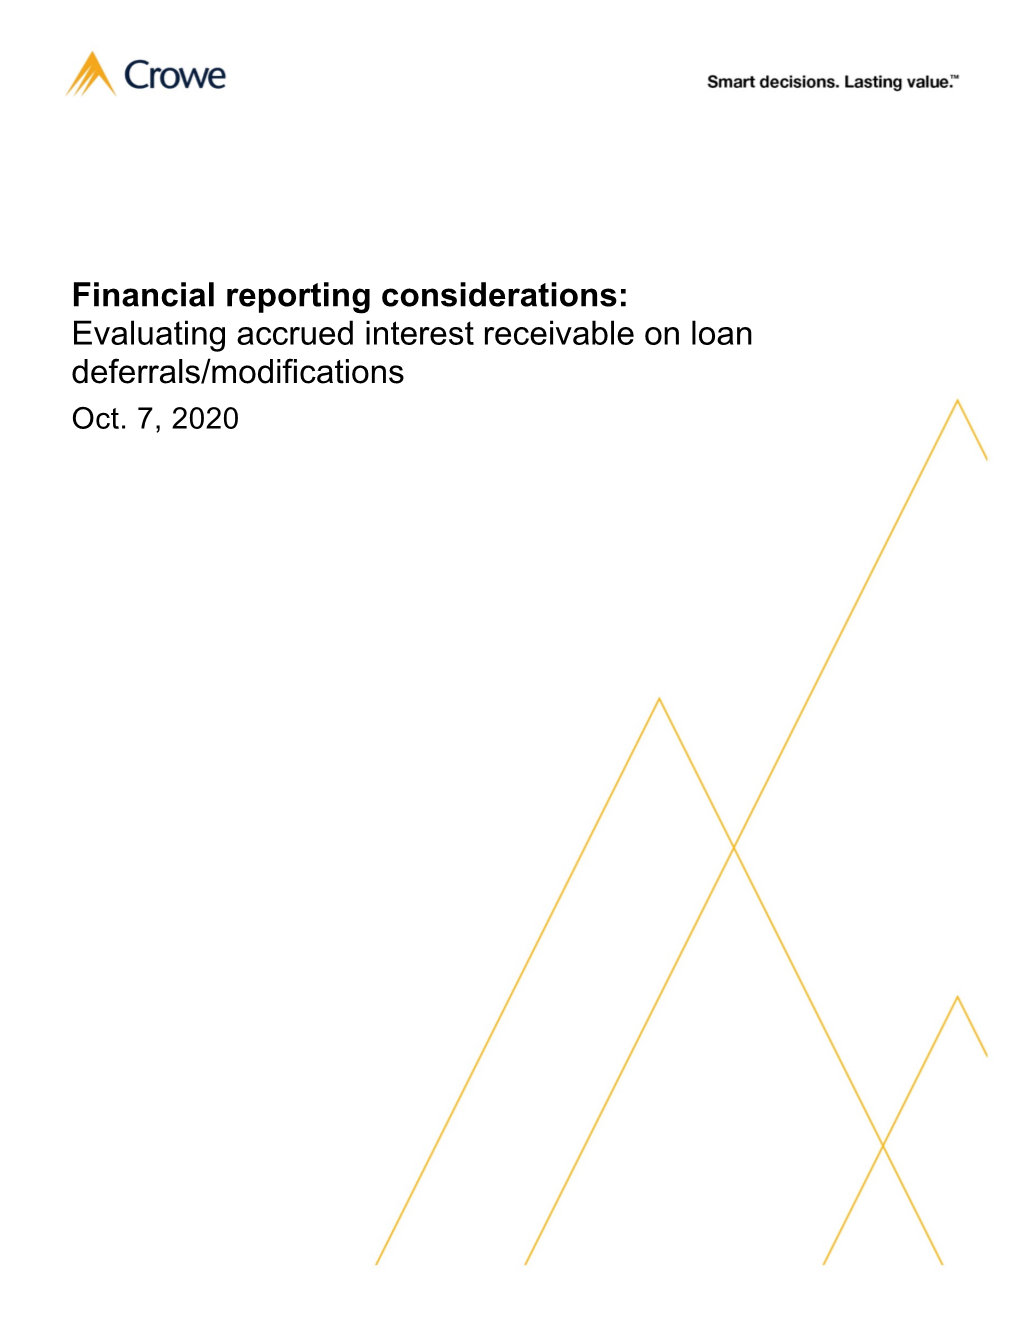 Evaluating Accrued Interest Receivable on Loan Deferrals/Modifications Oct